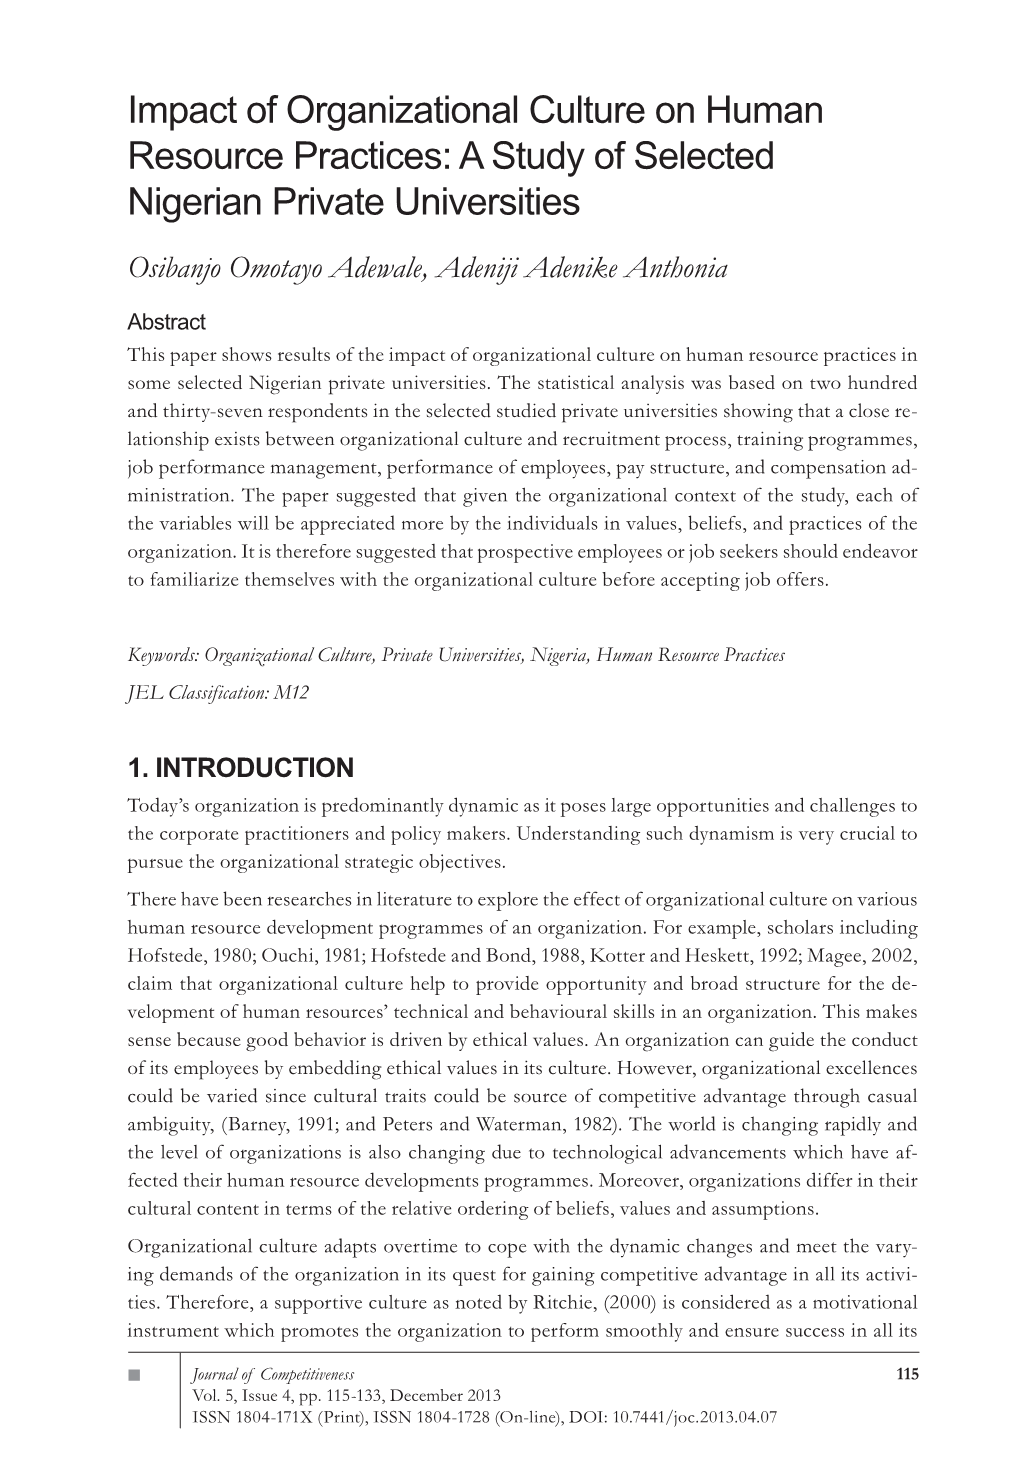 Impact of Organizational Culture on Human Resource Practices: a Study of Selected Nigerian Private Universities Osibanjo Omotayo Adewale, Adeniji Adenike Anthonia